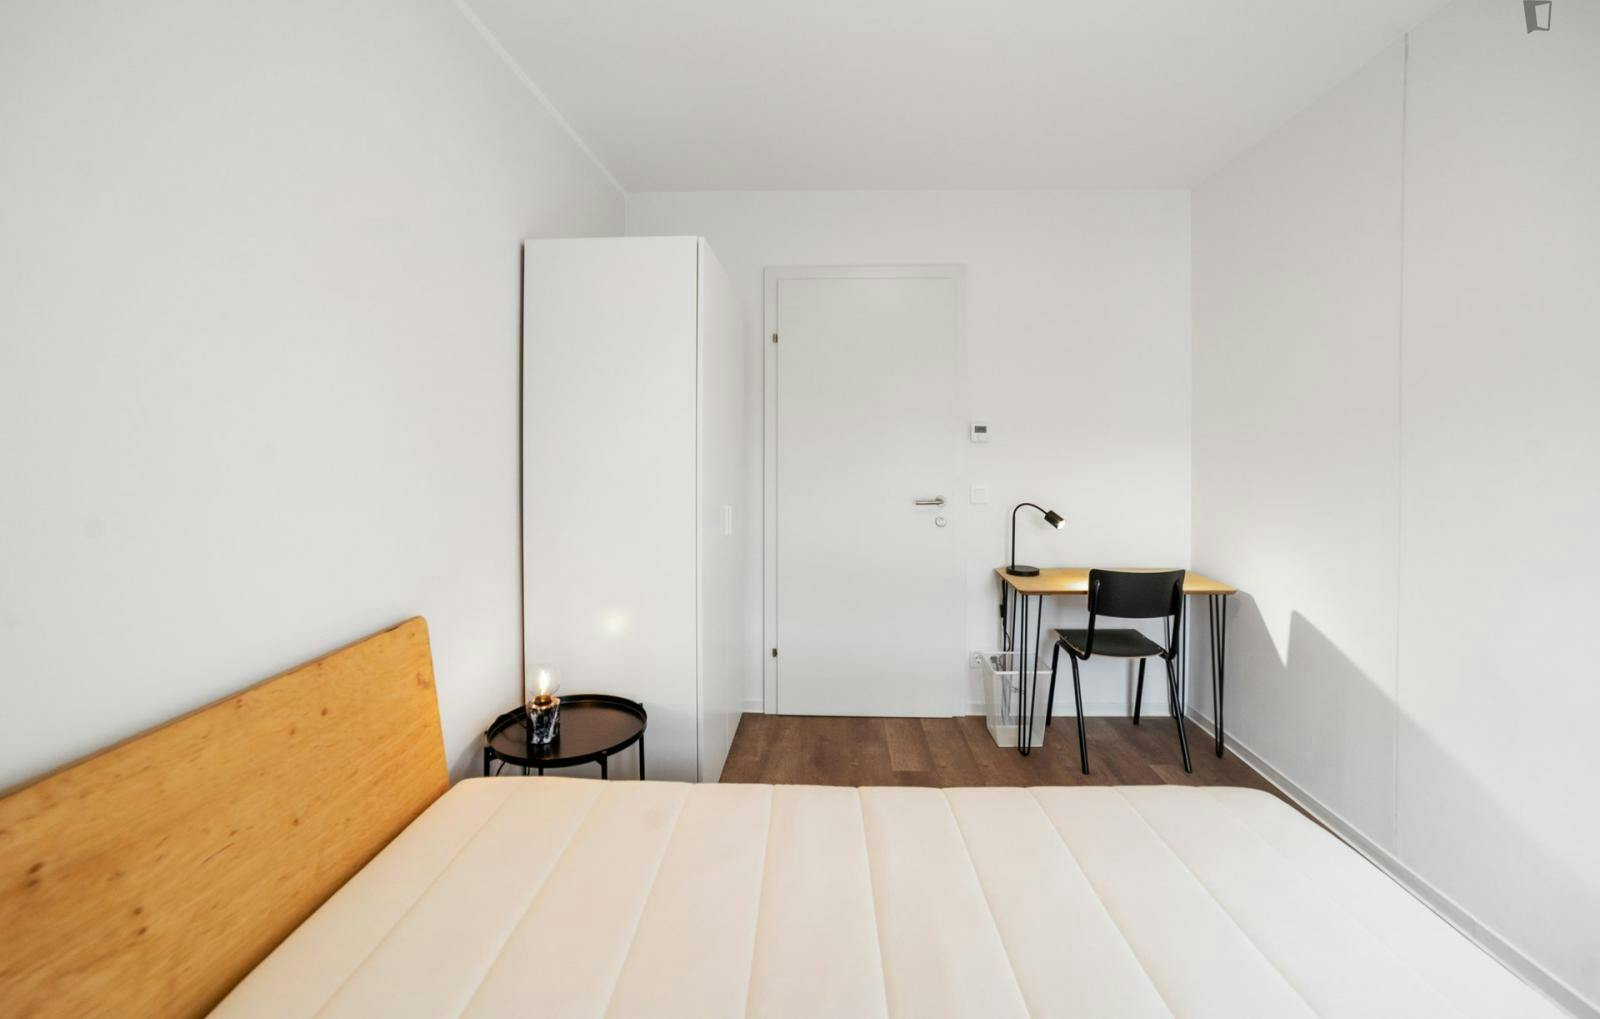 Homely single bedroom in residential Lend